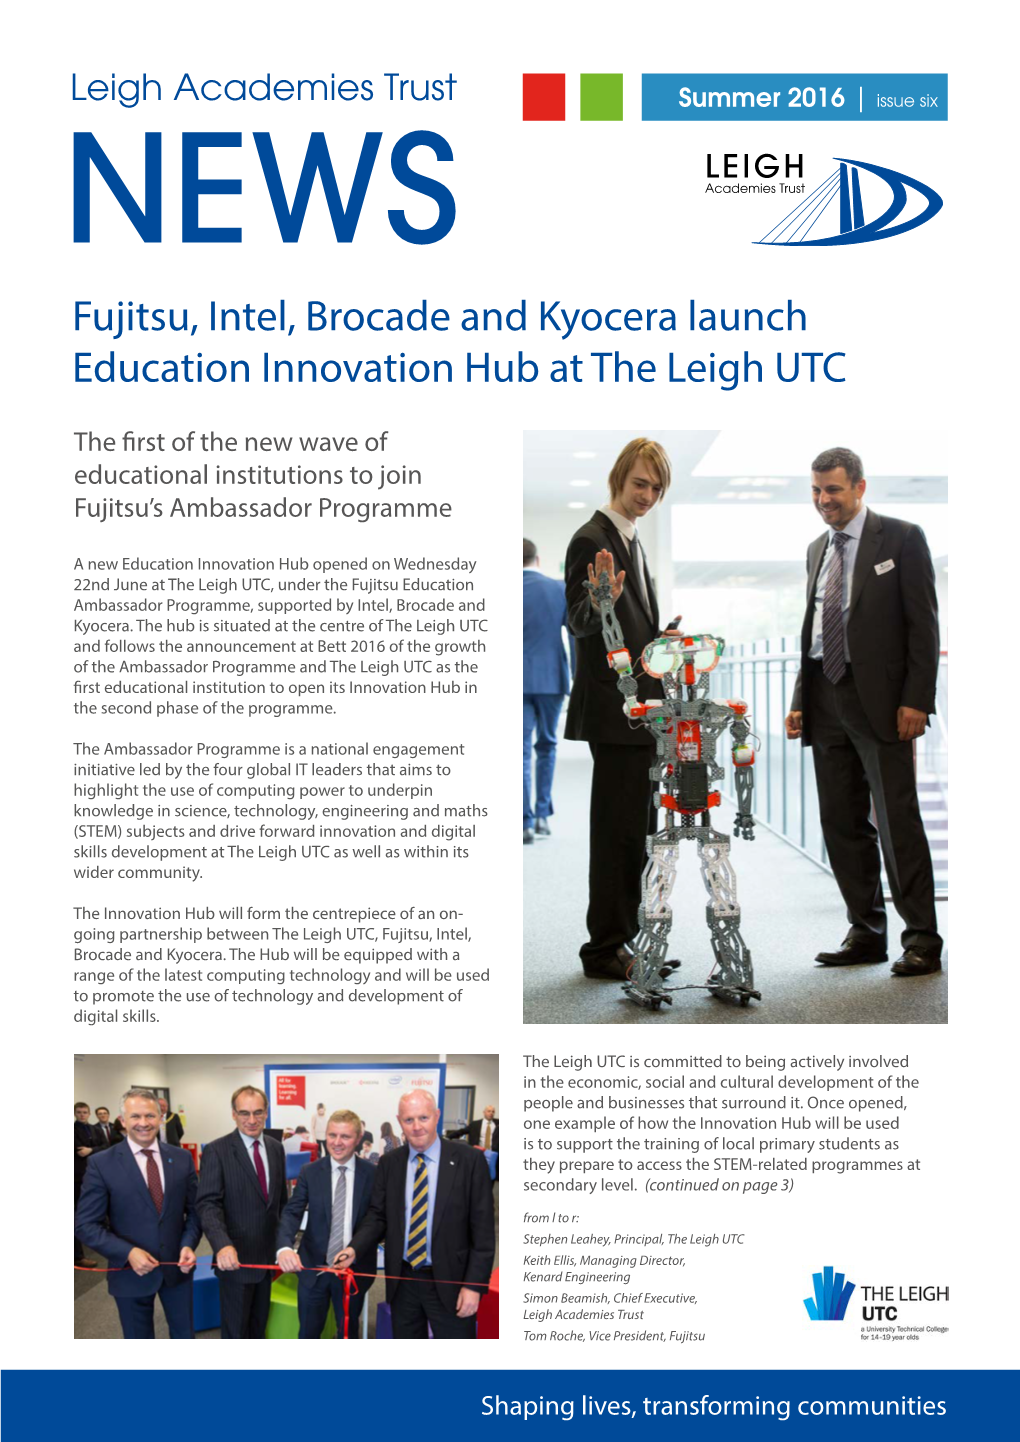 Fujitsu, Intel, Brocade and Kyocera Launch Education Innovation Hub at the Leigh UTC